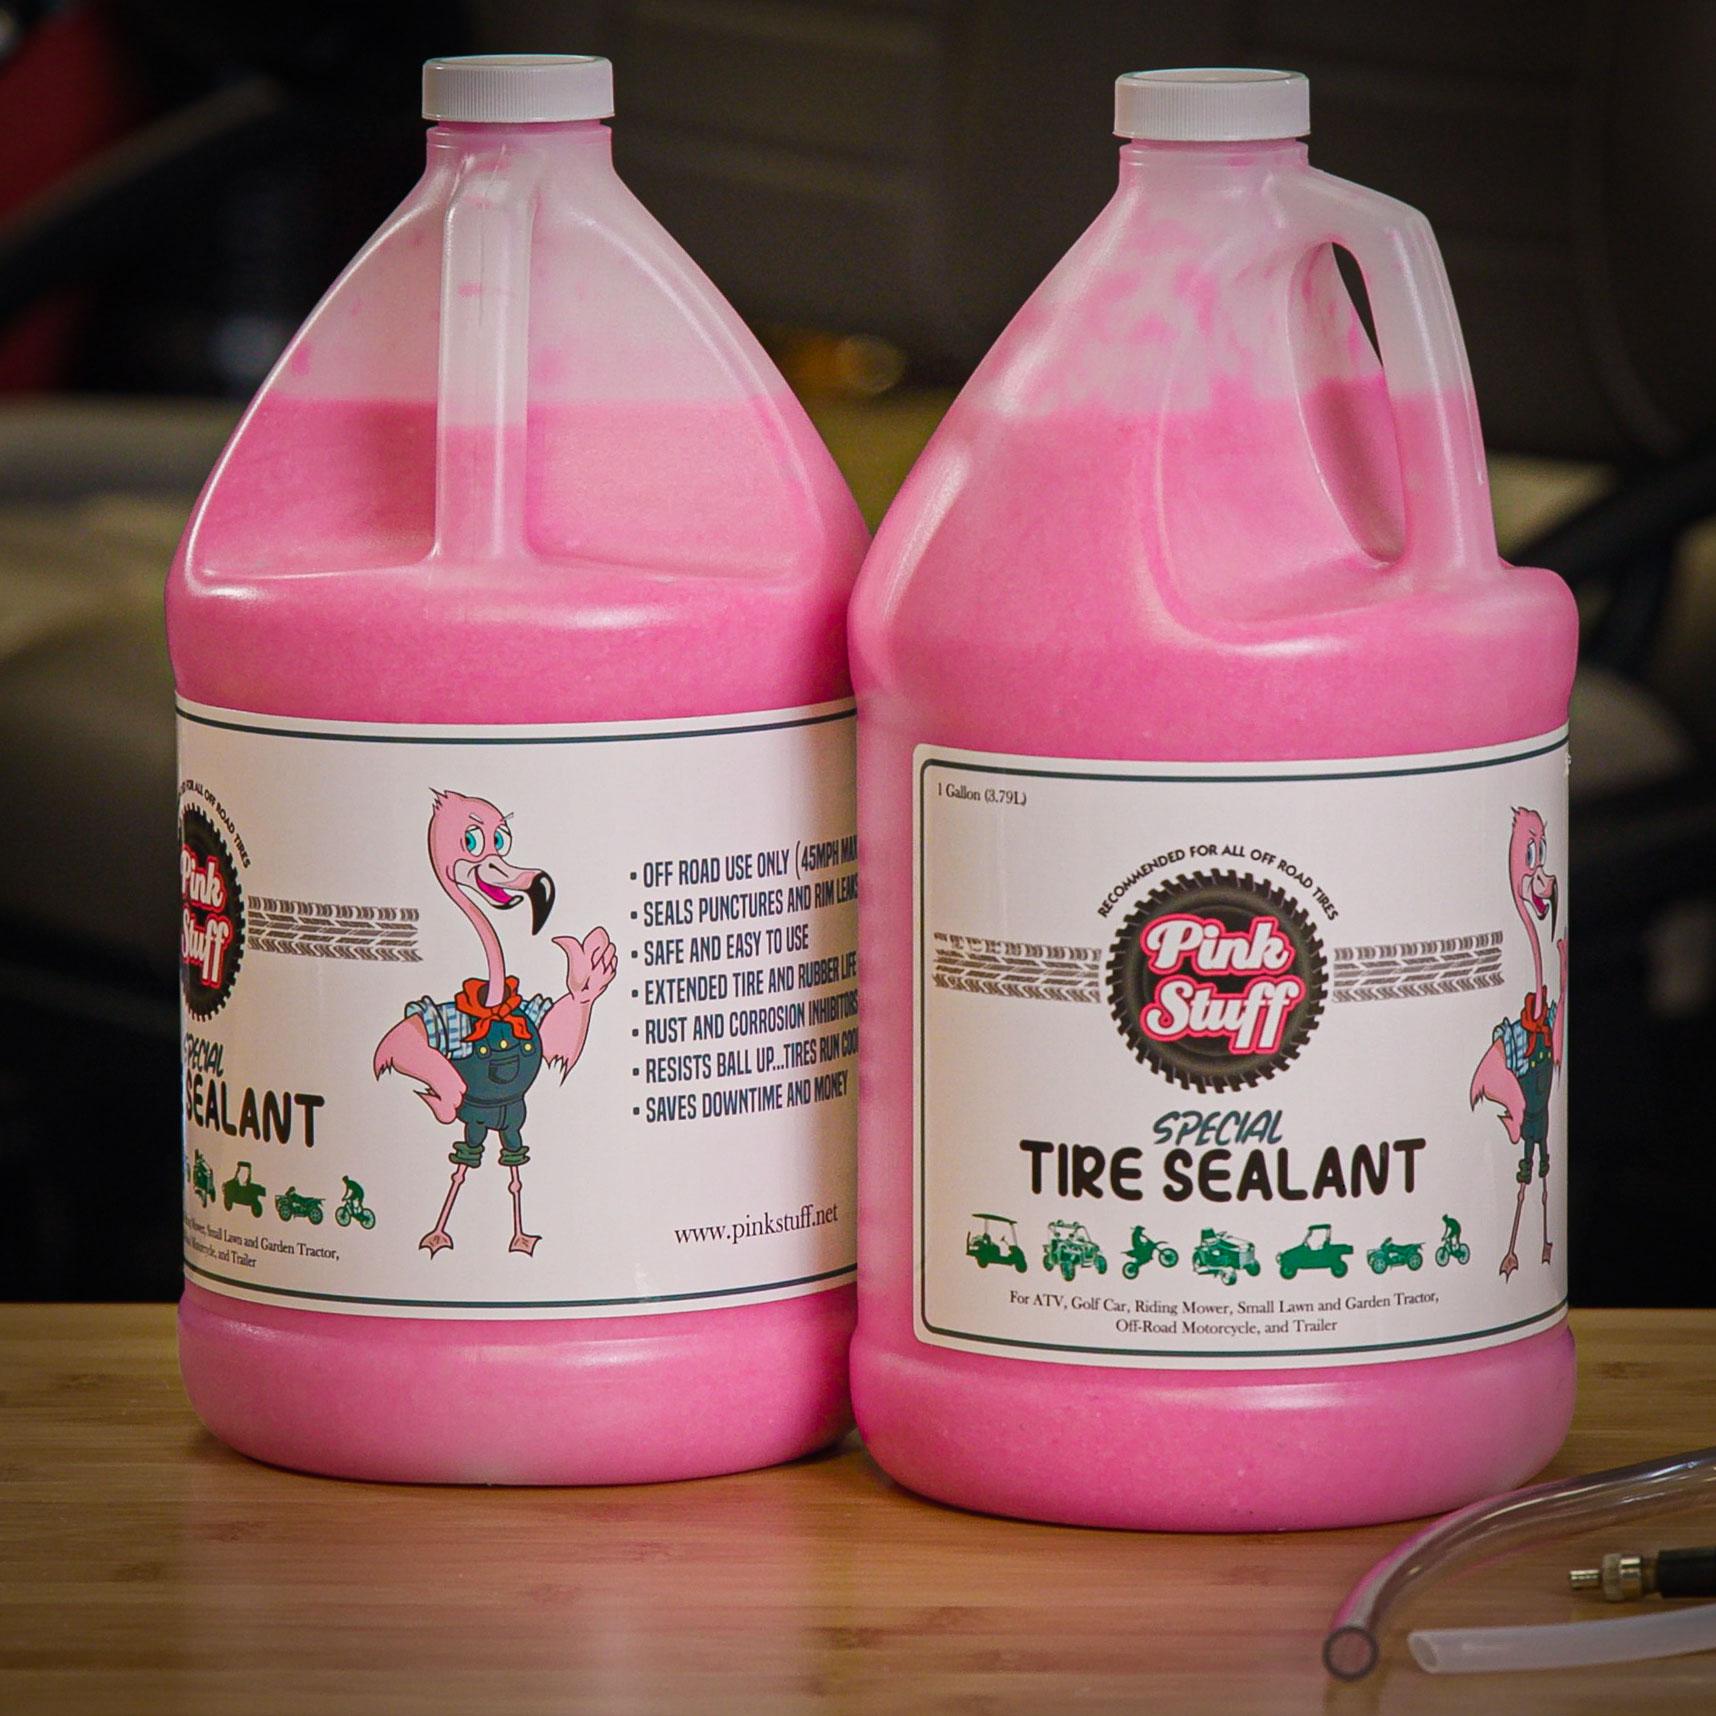 Pink Stuff gallon bottles